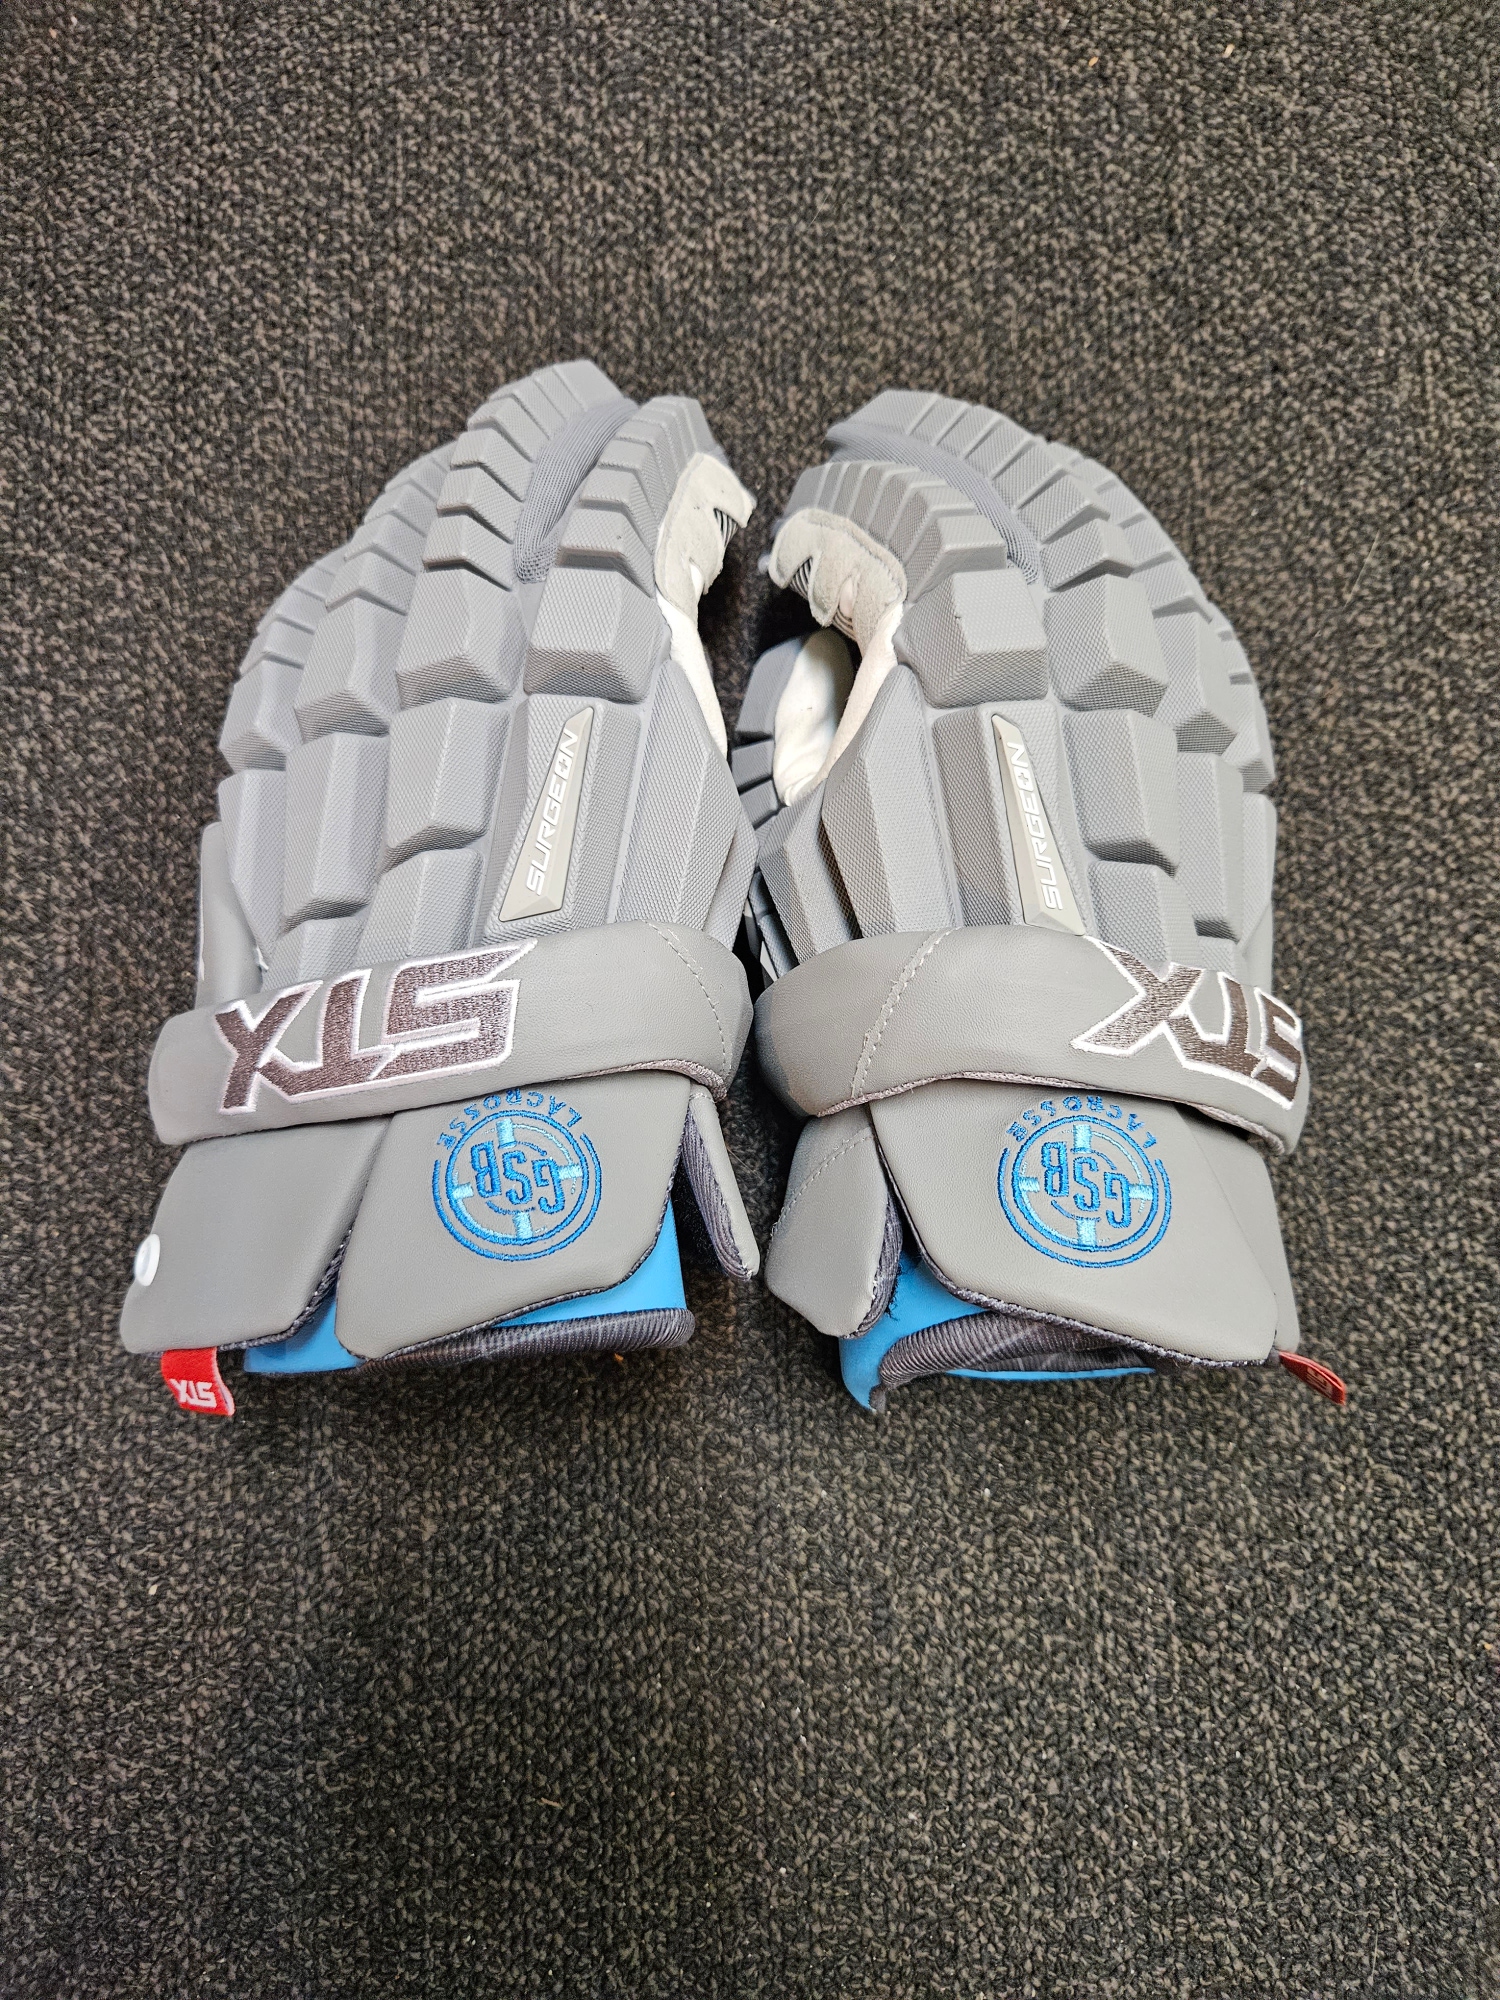 New STX Surgeon RZR Lacrosse Gloves Large